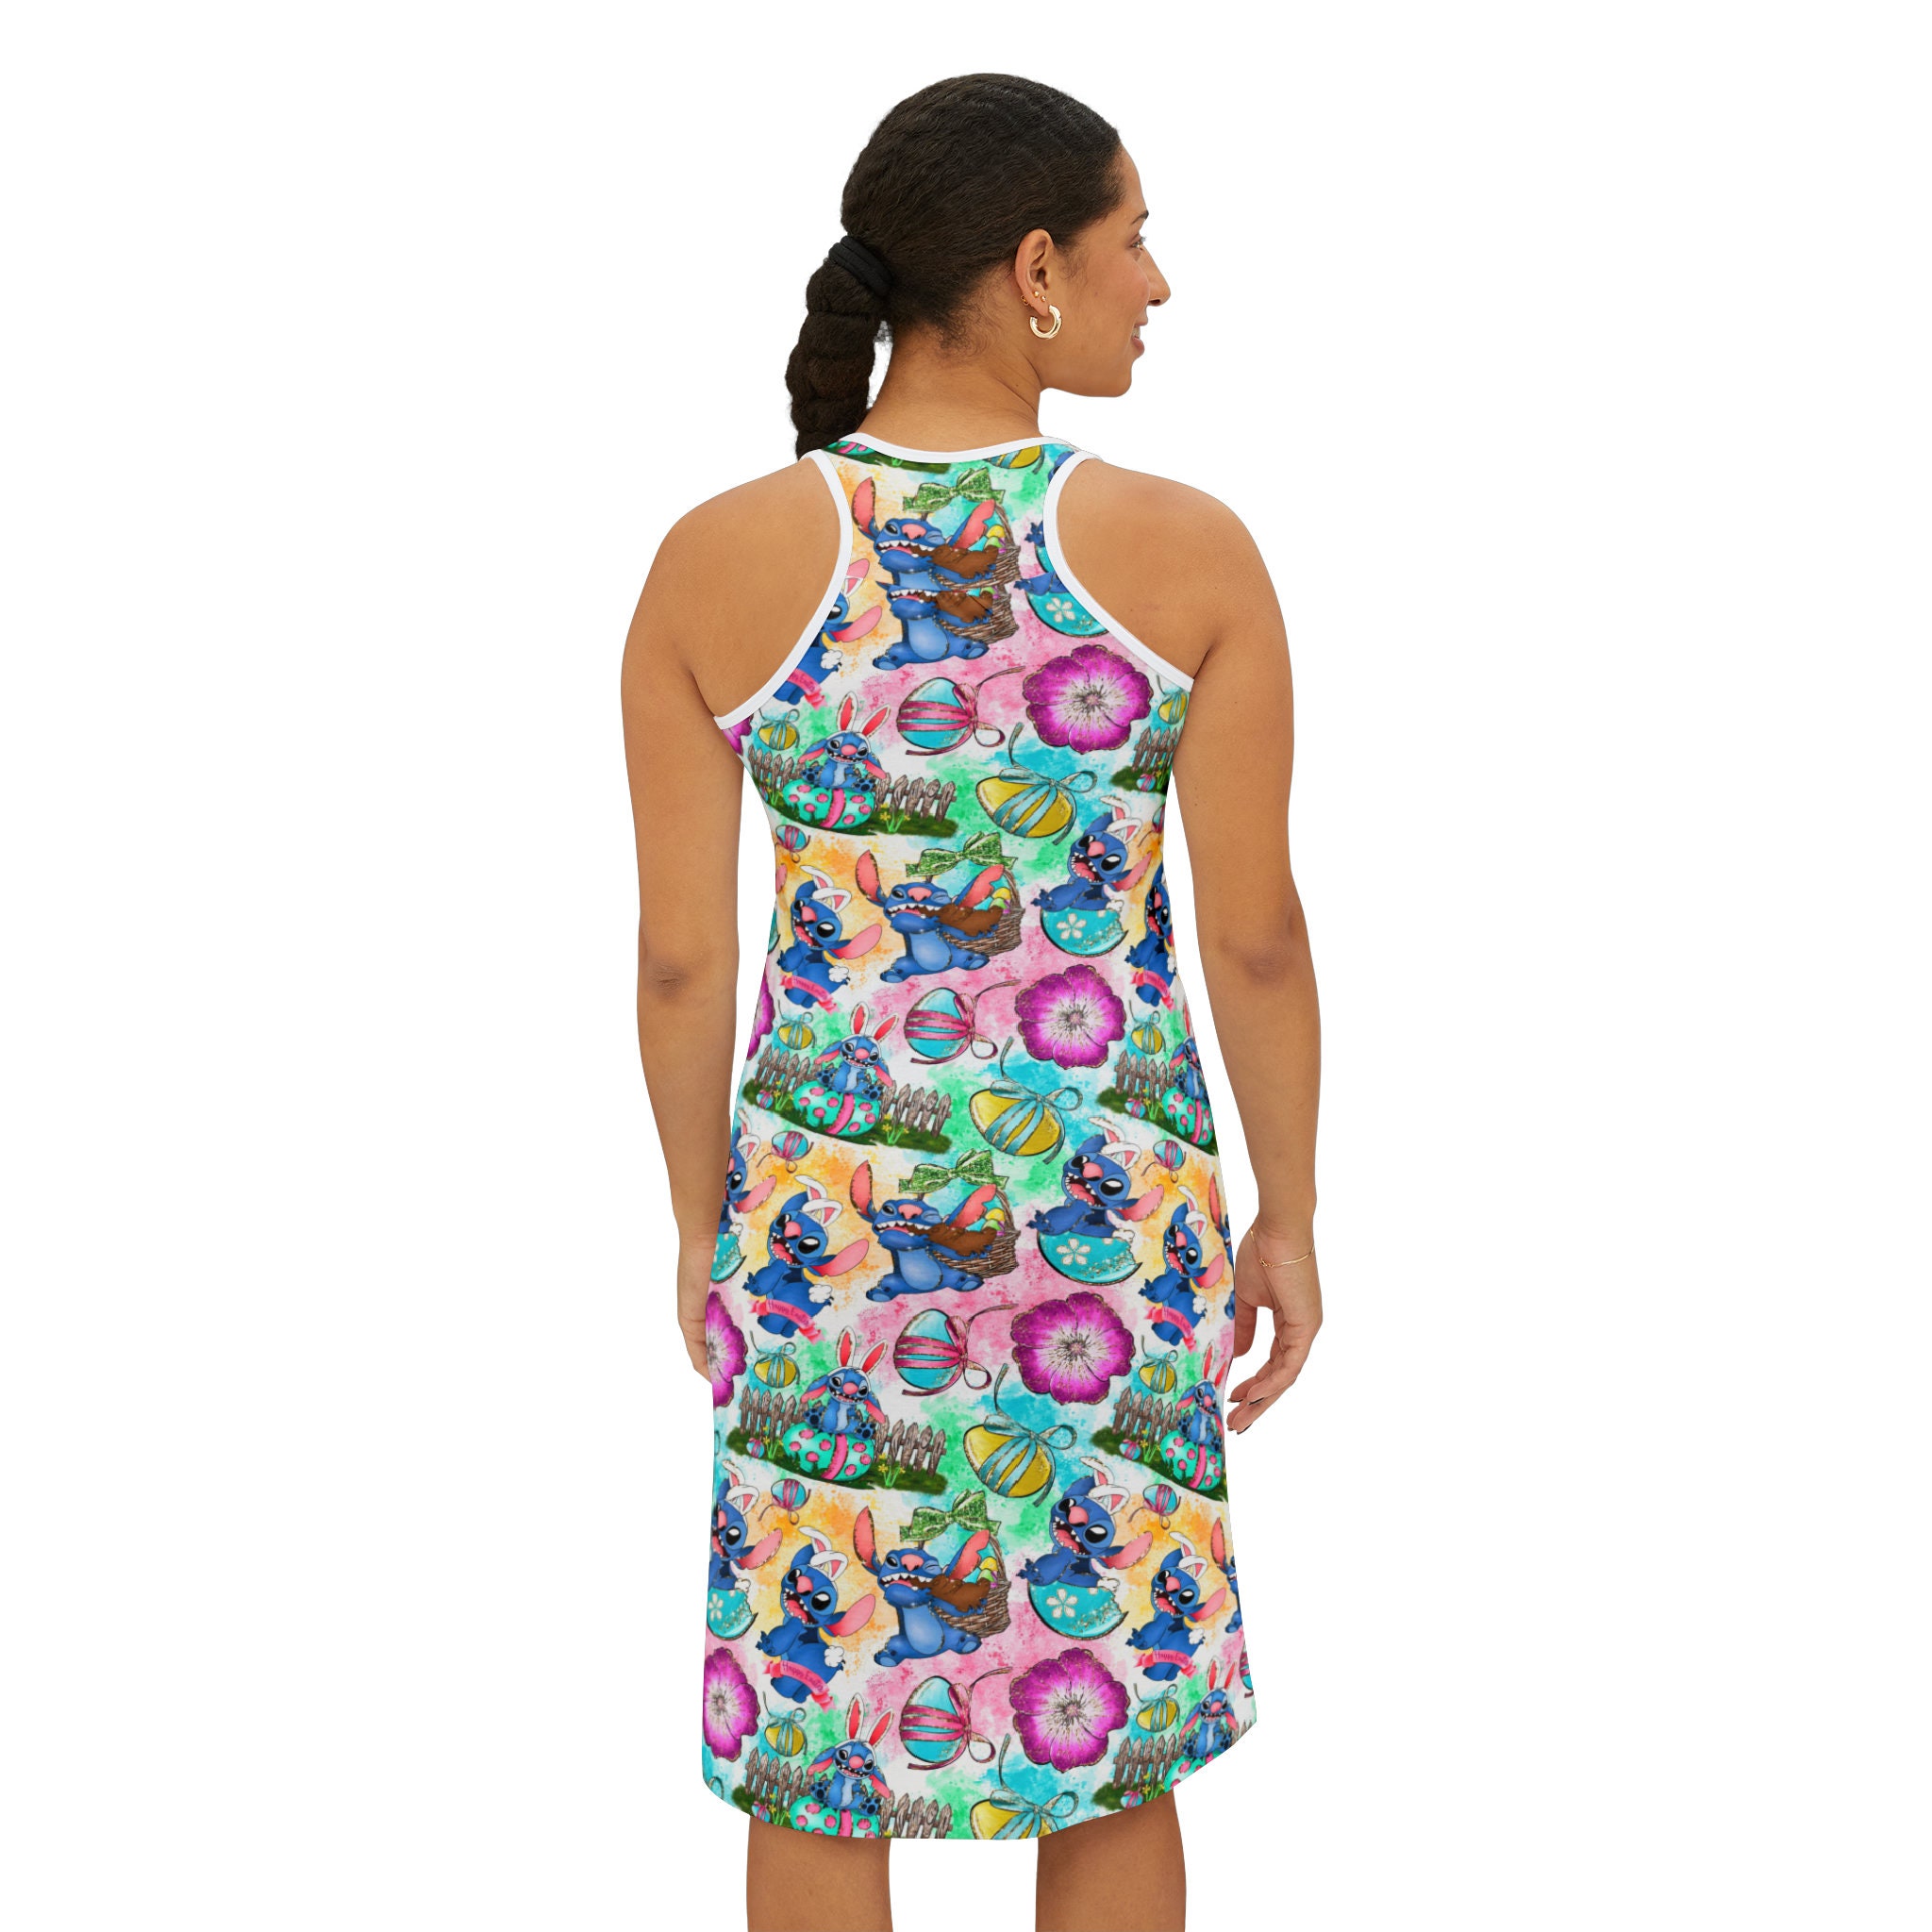 Stitch Easter Disney Women's Cut & Sew Racerback Dress